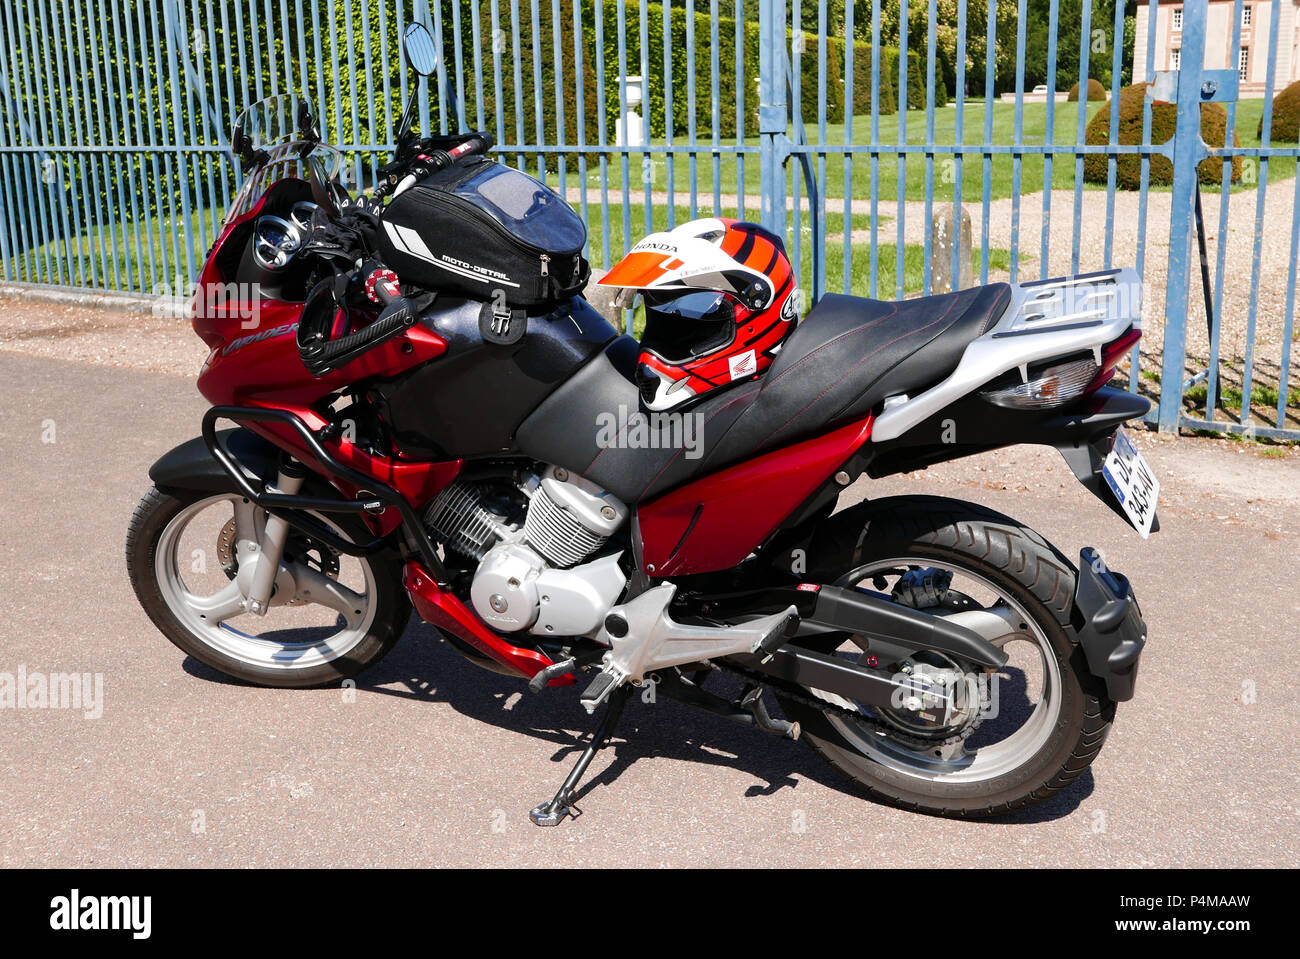 Honda Varadero 125, motorcycle in country, Ile-de-France, France, Europe  Stock Photo - Alamy